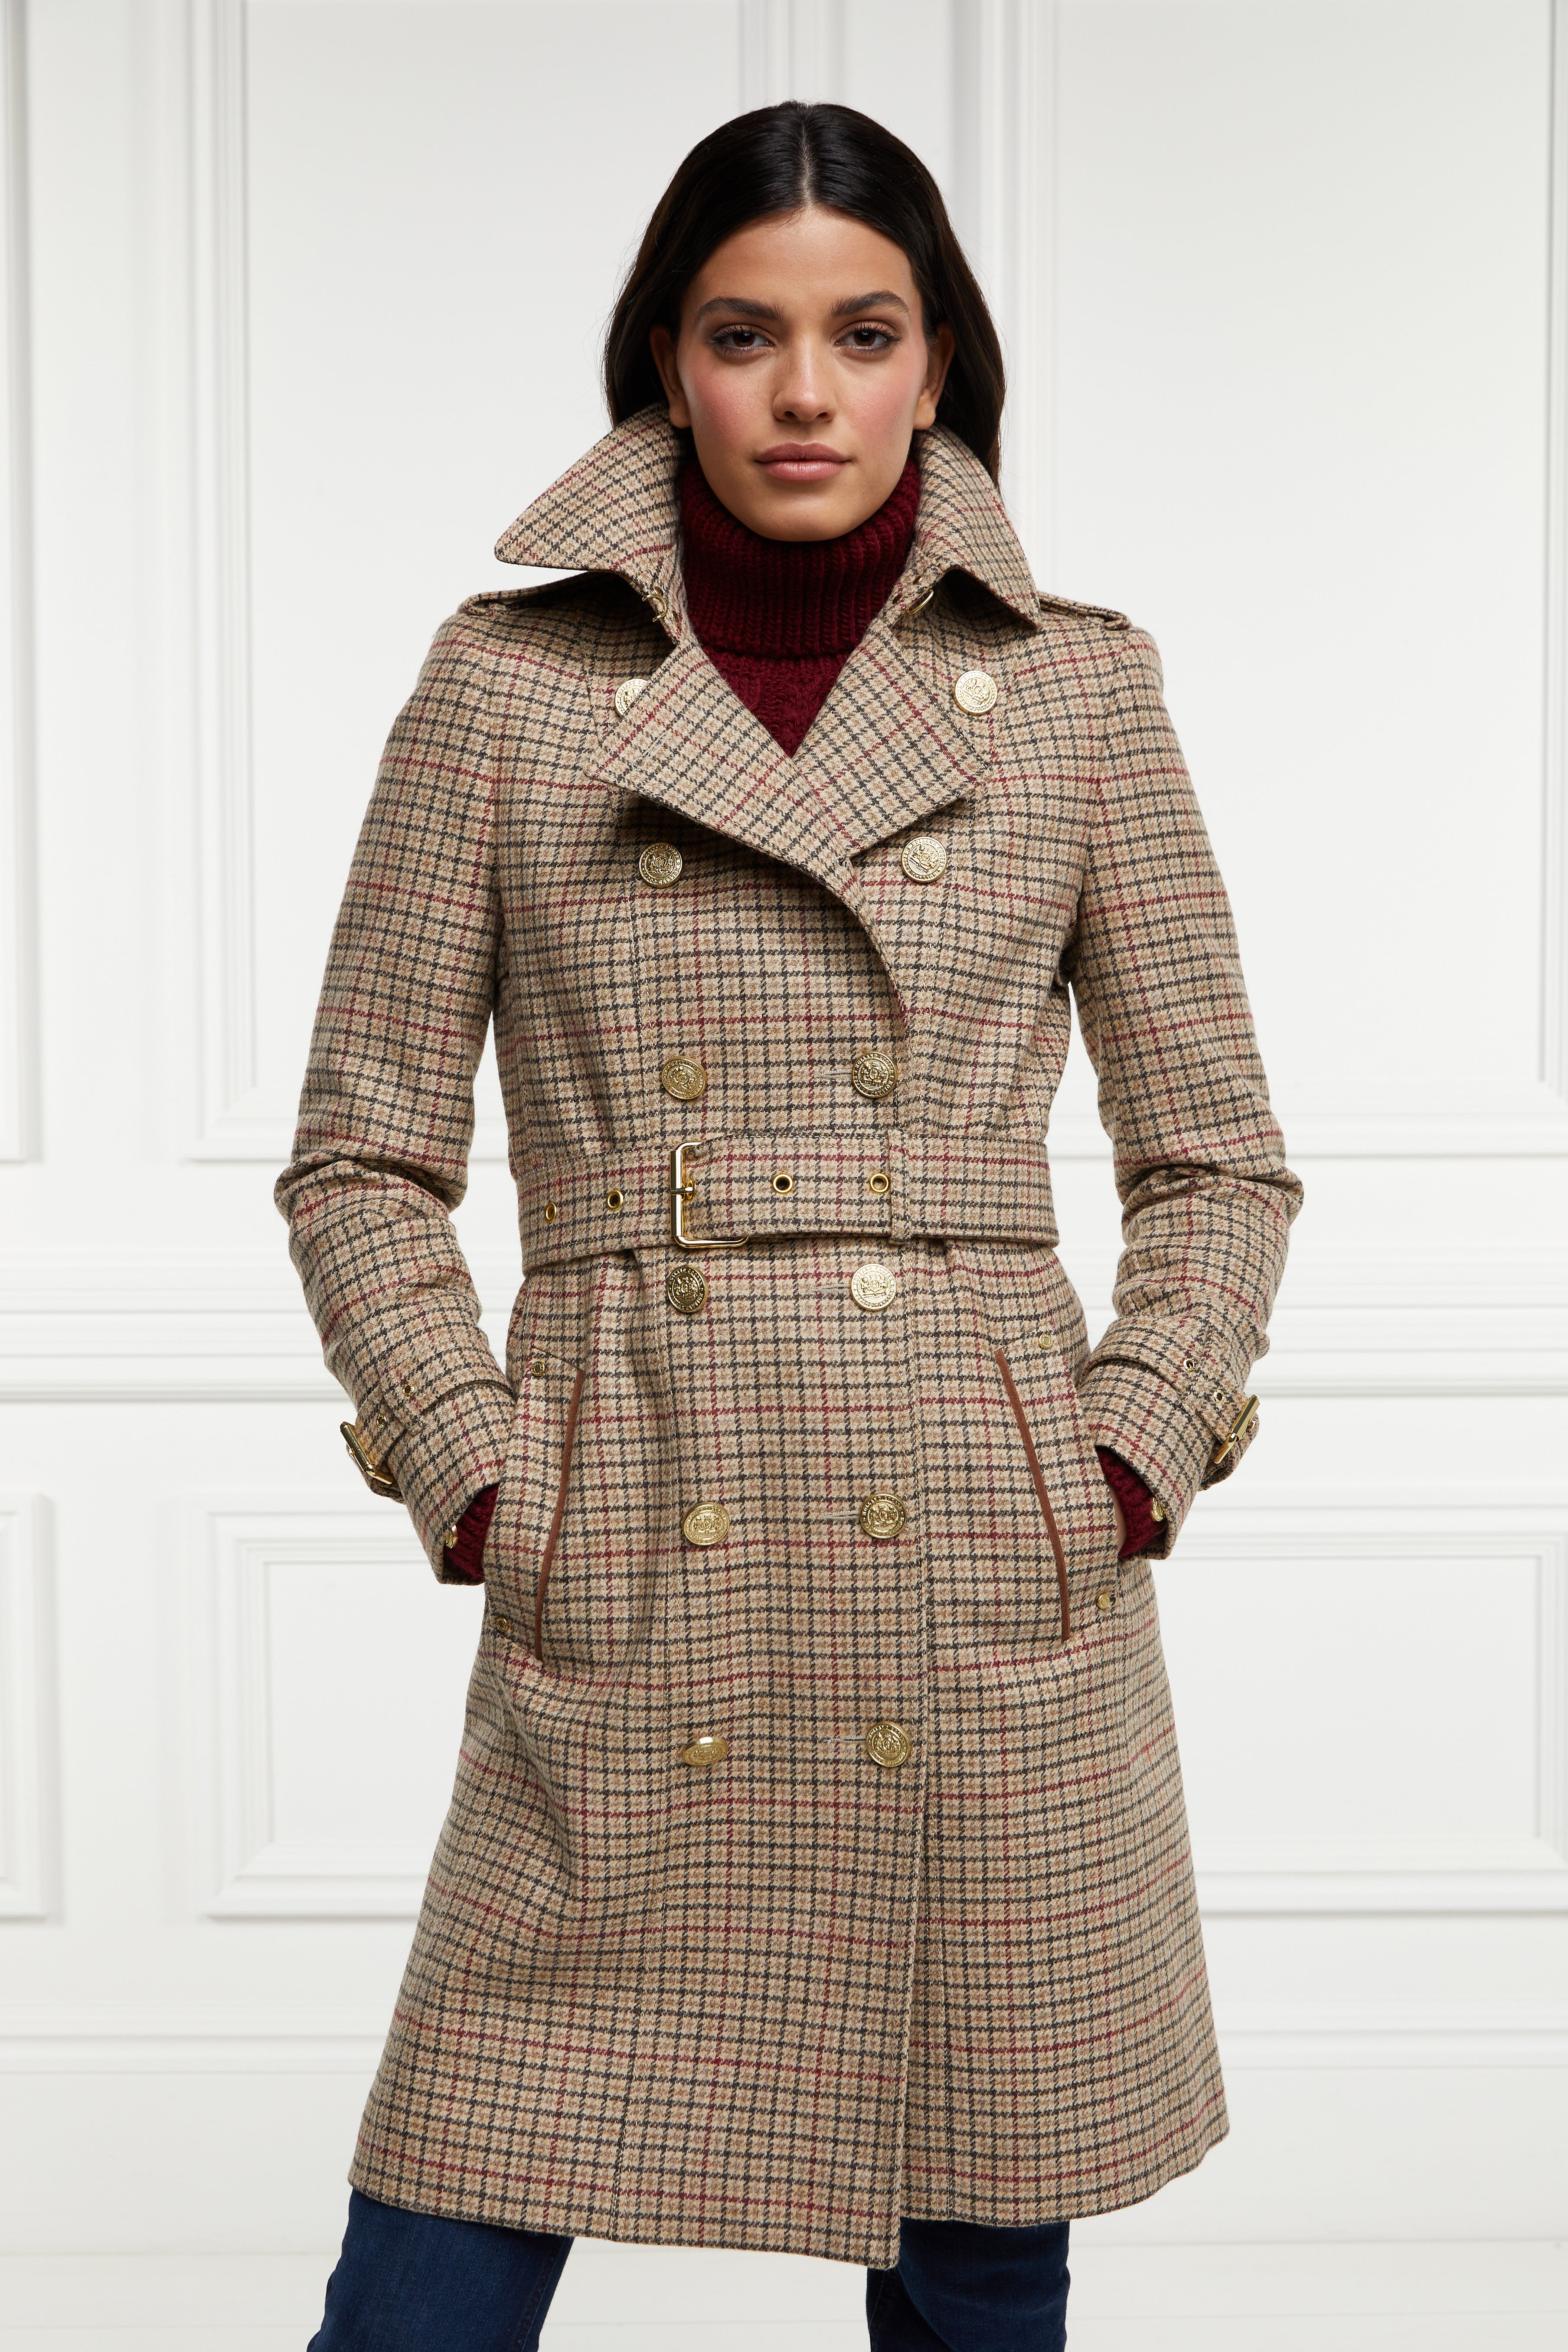 Marlborough Trench Coat (Charlton Tweed) – Holland Cooper ®